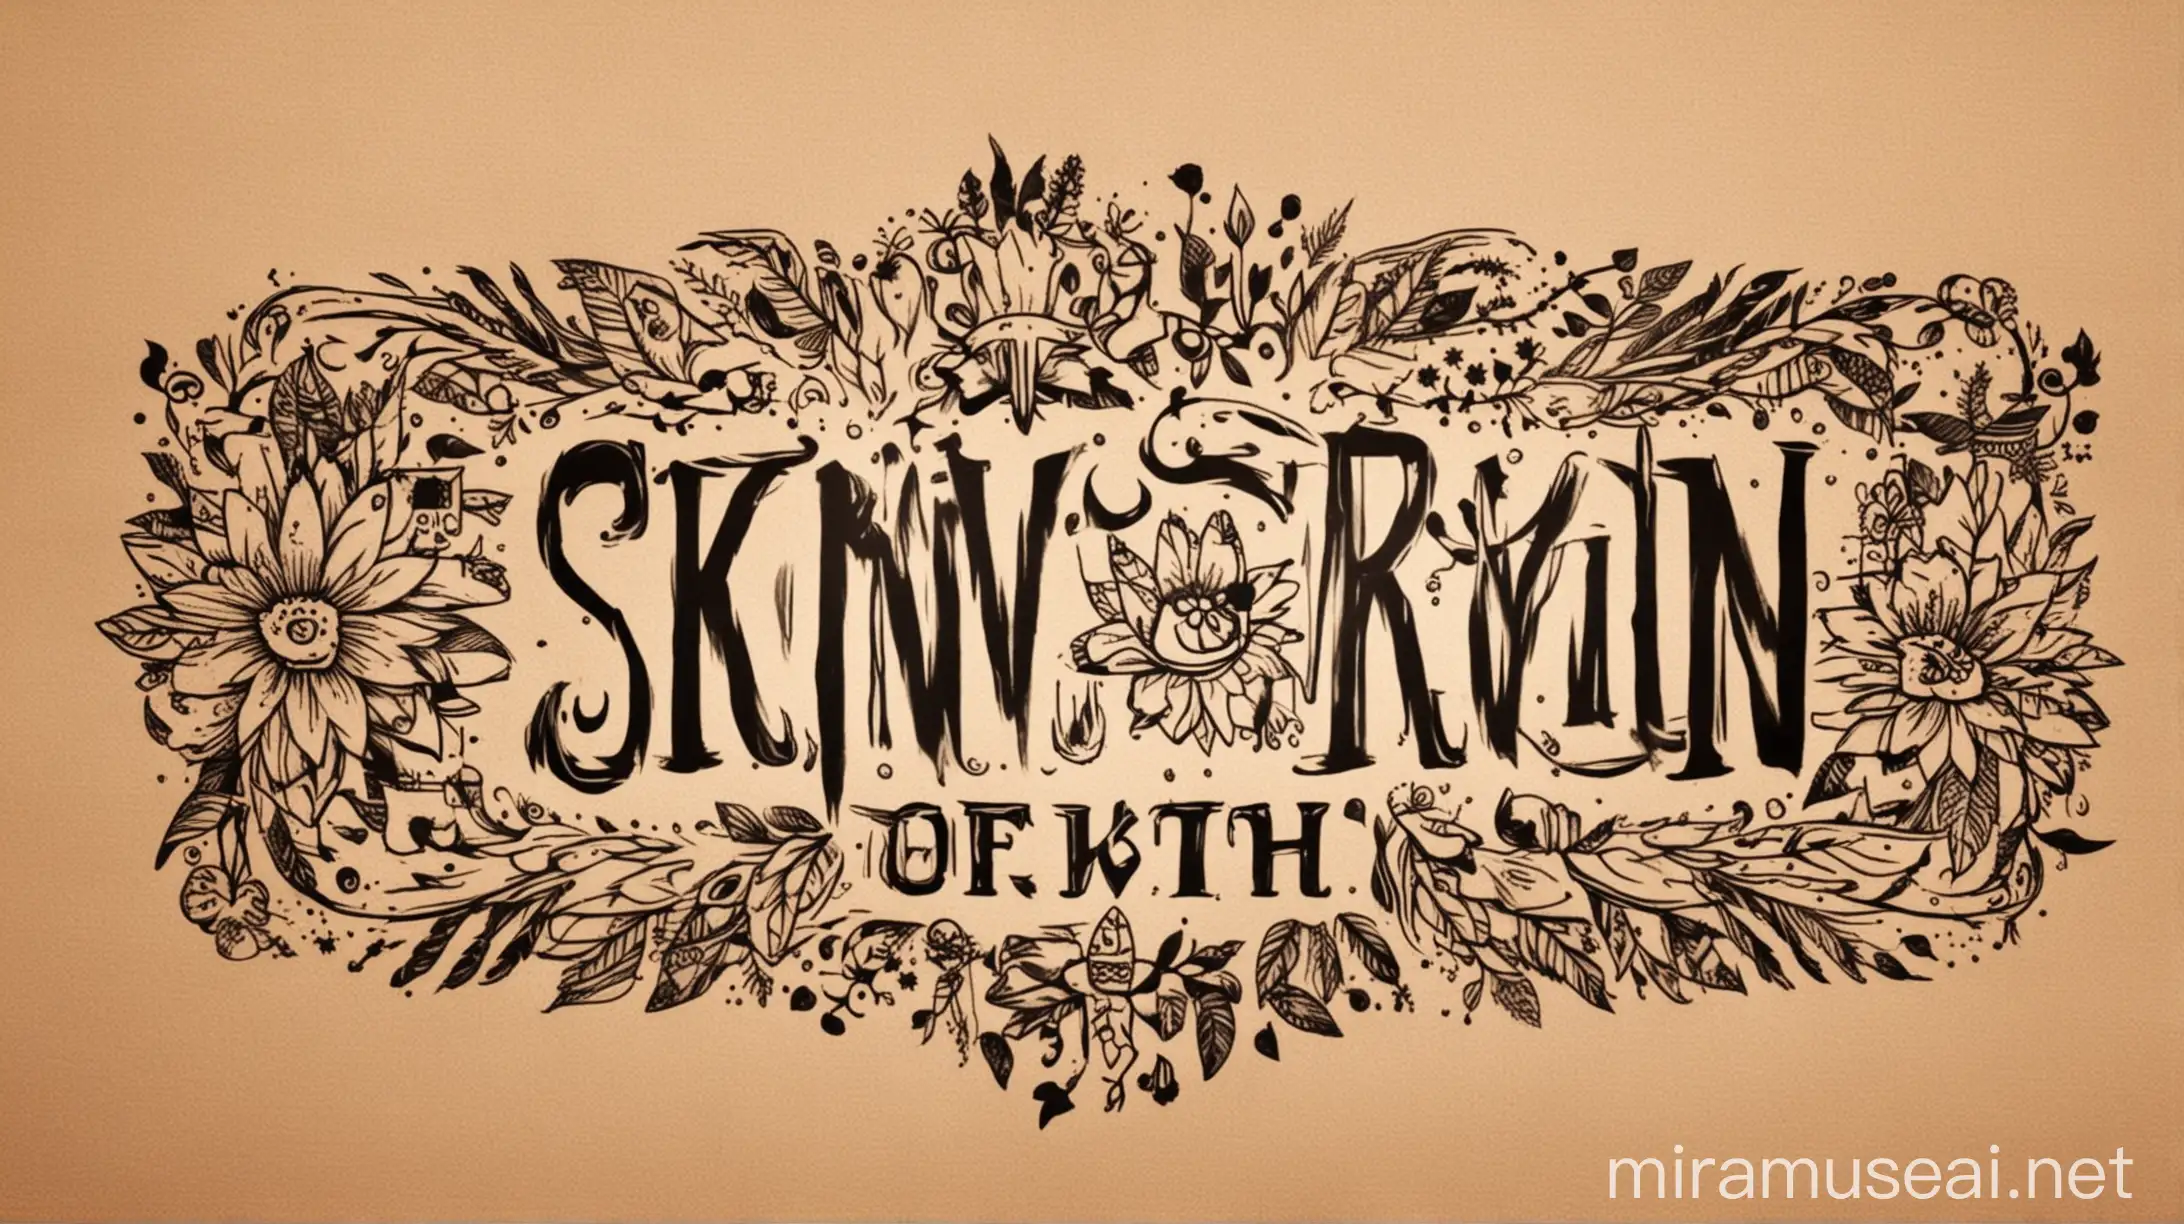 Vibrant Temporary Tattoo Stall Banner for Skin Canvas Festival